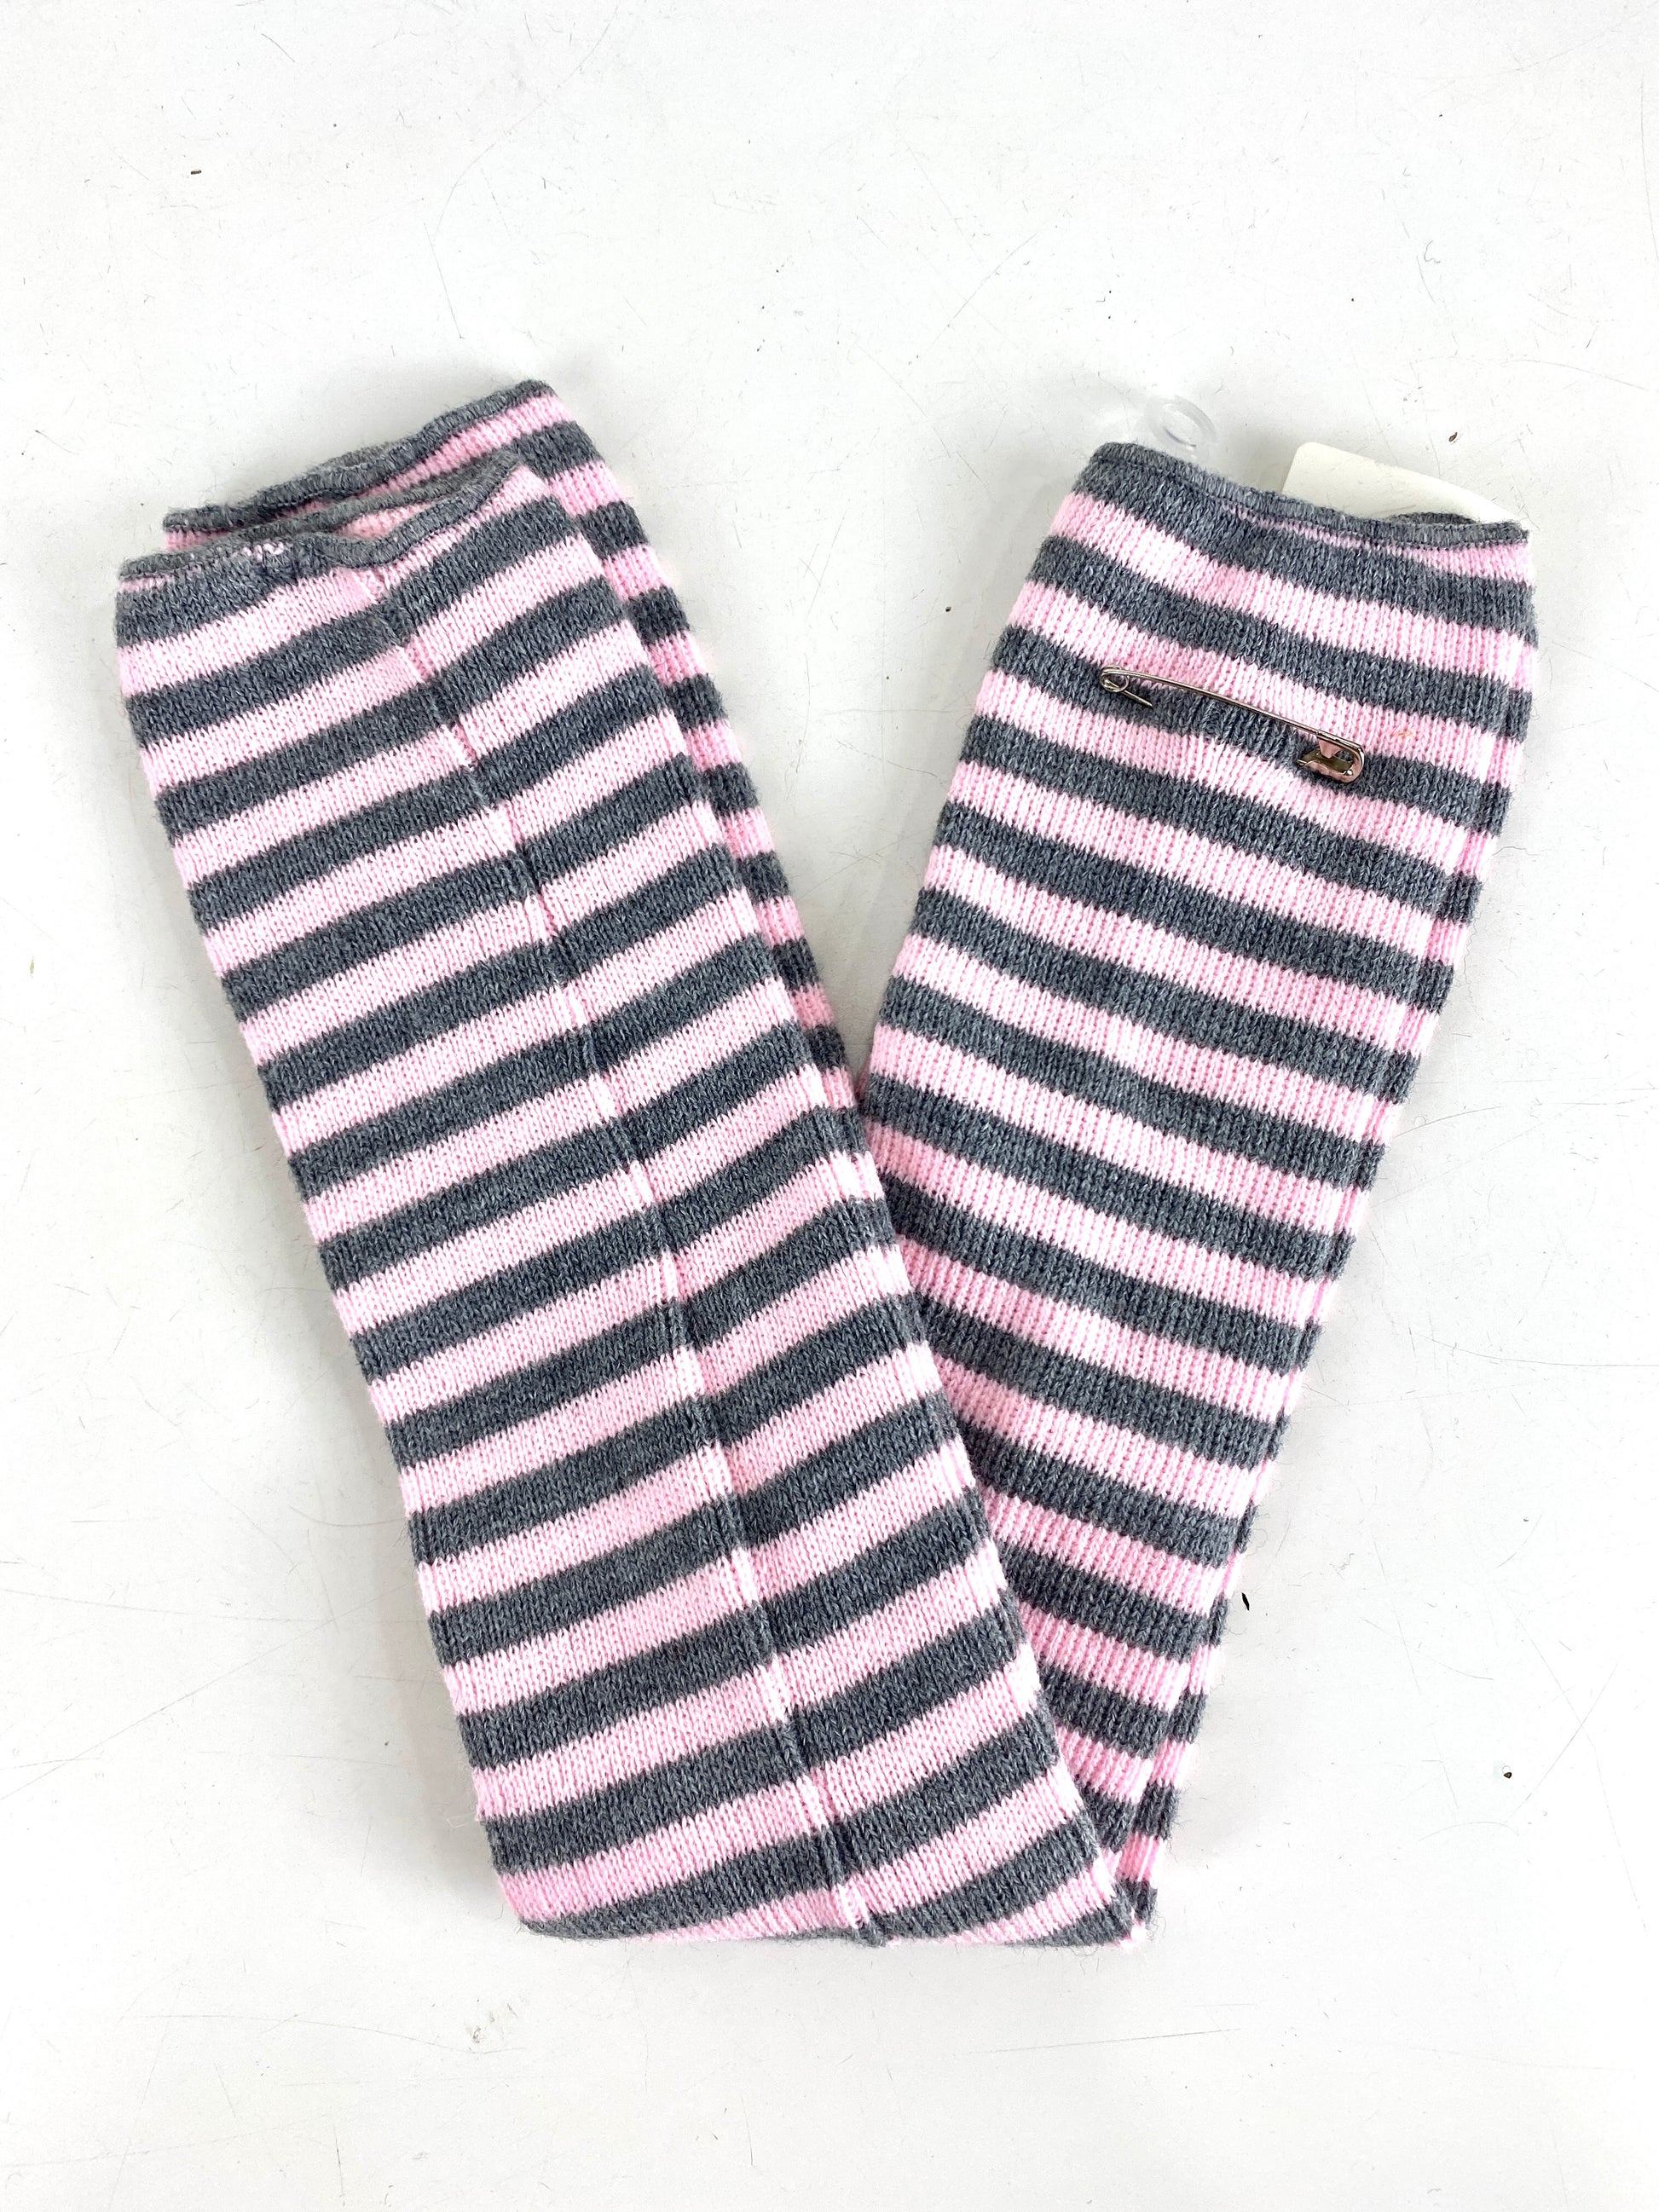 1980s Vintage Deadstock Knit Leg Warmers, Pink/ Grey Striped Acrylic Leg Warmers, NOS